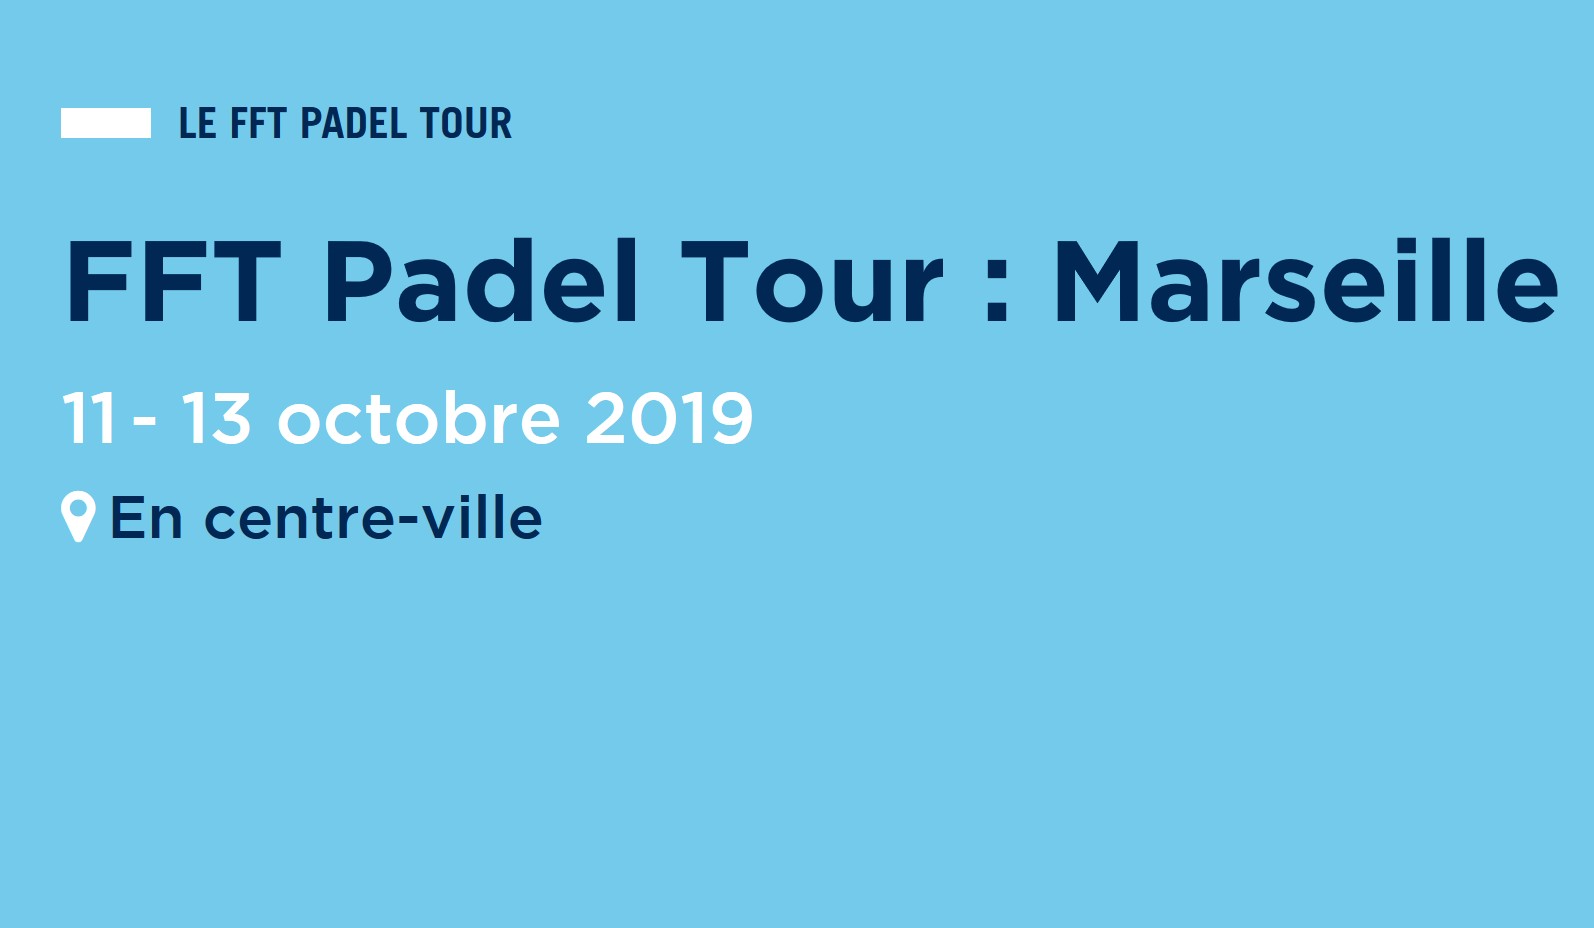 FFT Padel Tour Marseille – Datoer